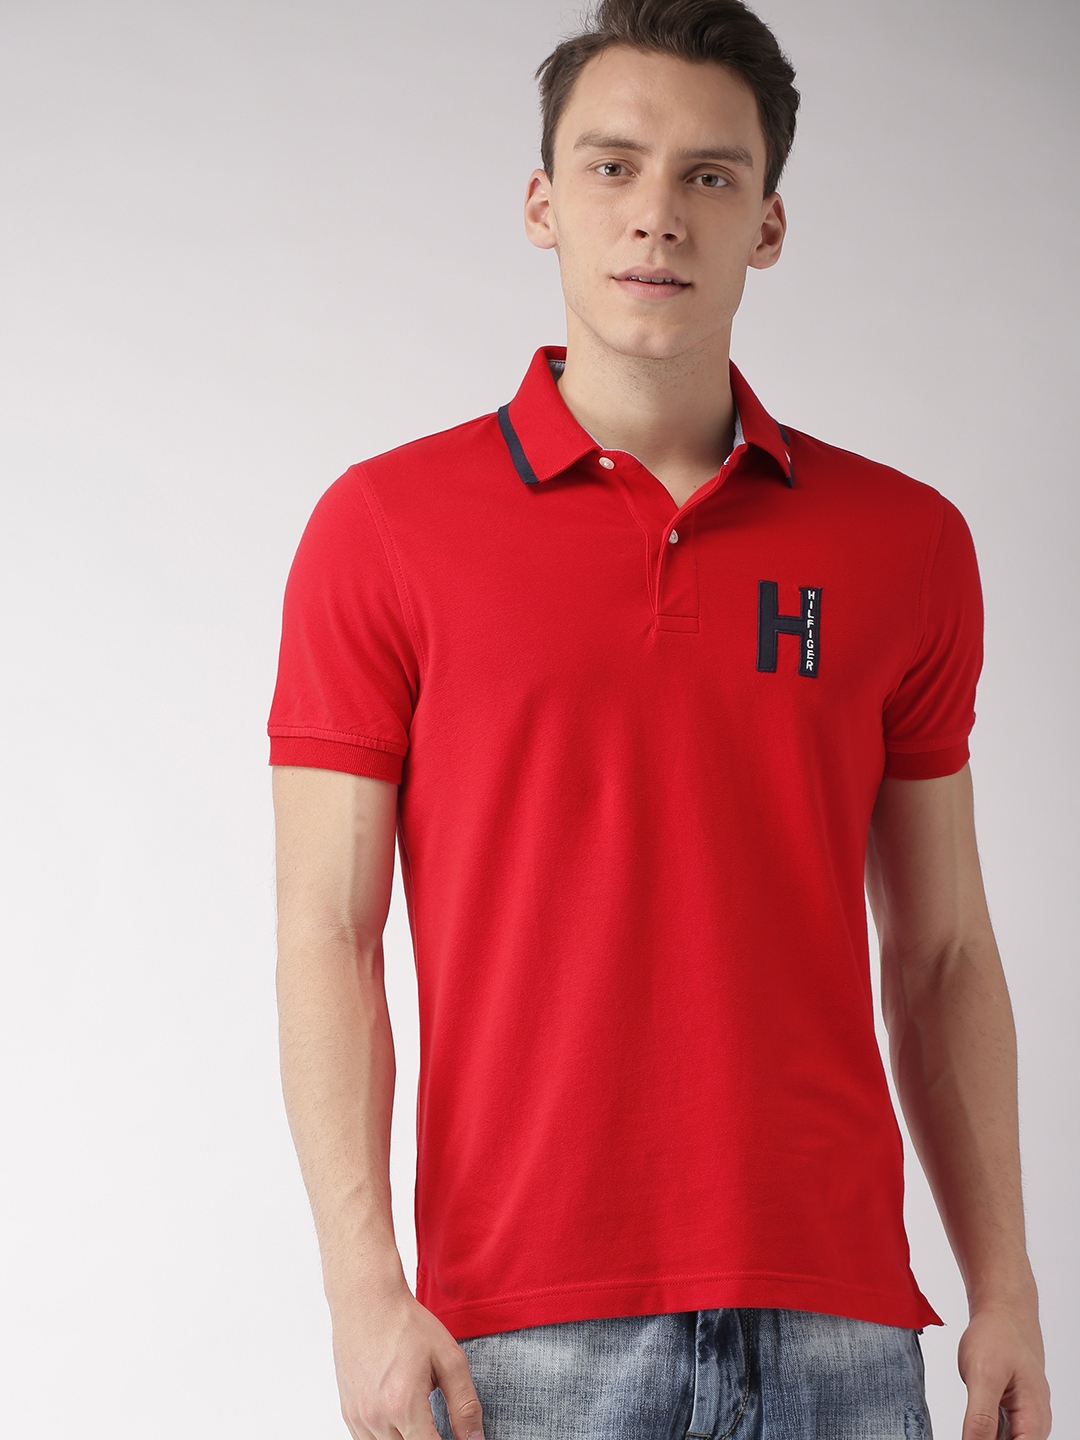 Husarbejde Tage en risiko handicap Buy Tommy Hilfiger Men Red Solid Polo Collar T Shirt - Tshirts for Men  8796611 | Myntra